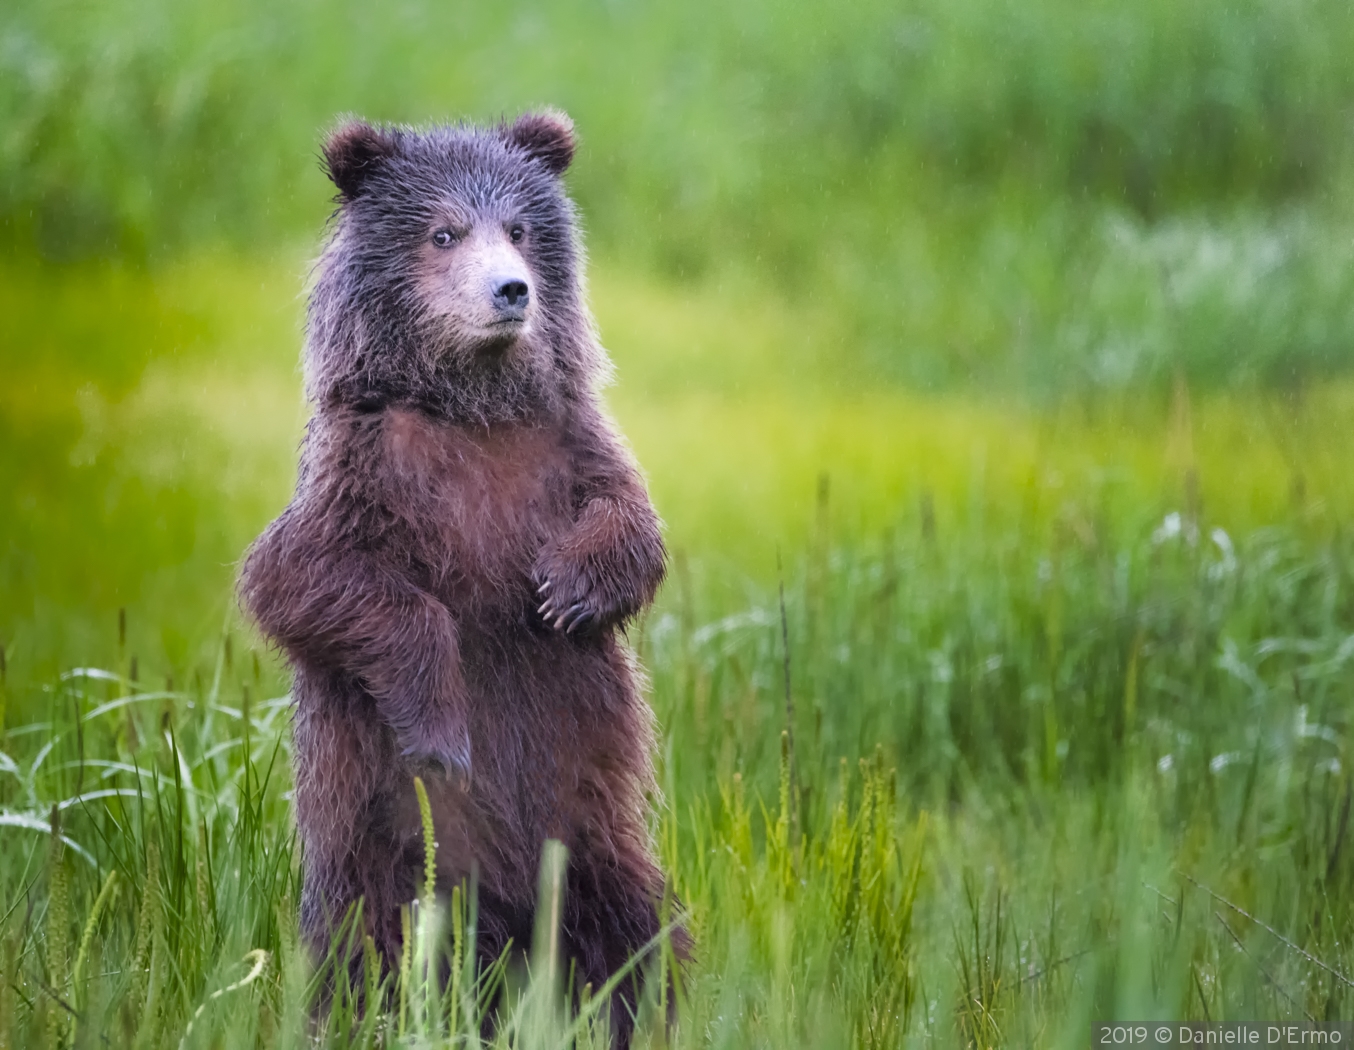 Bear Cub with Attitude by Danielle D'Ermo